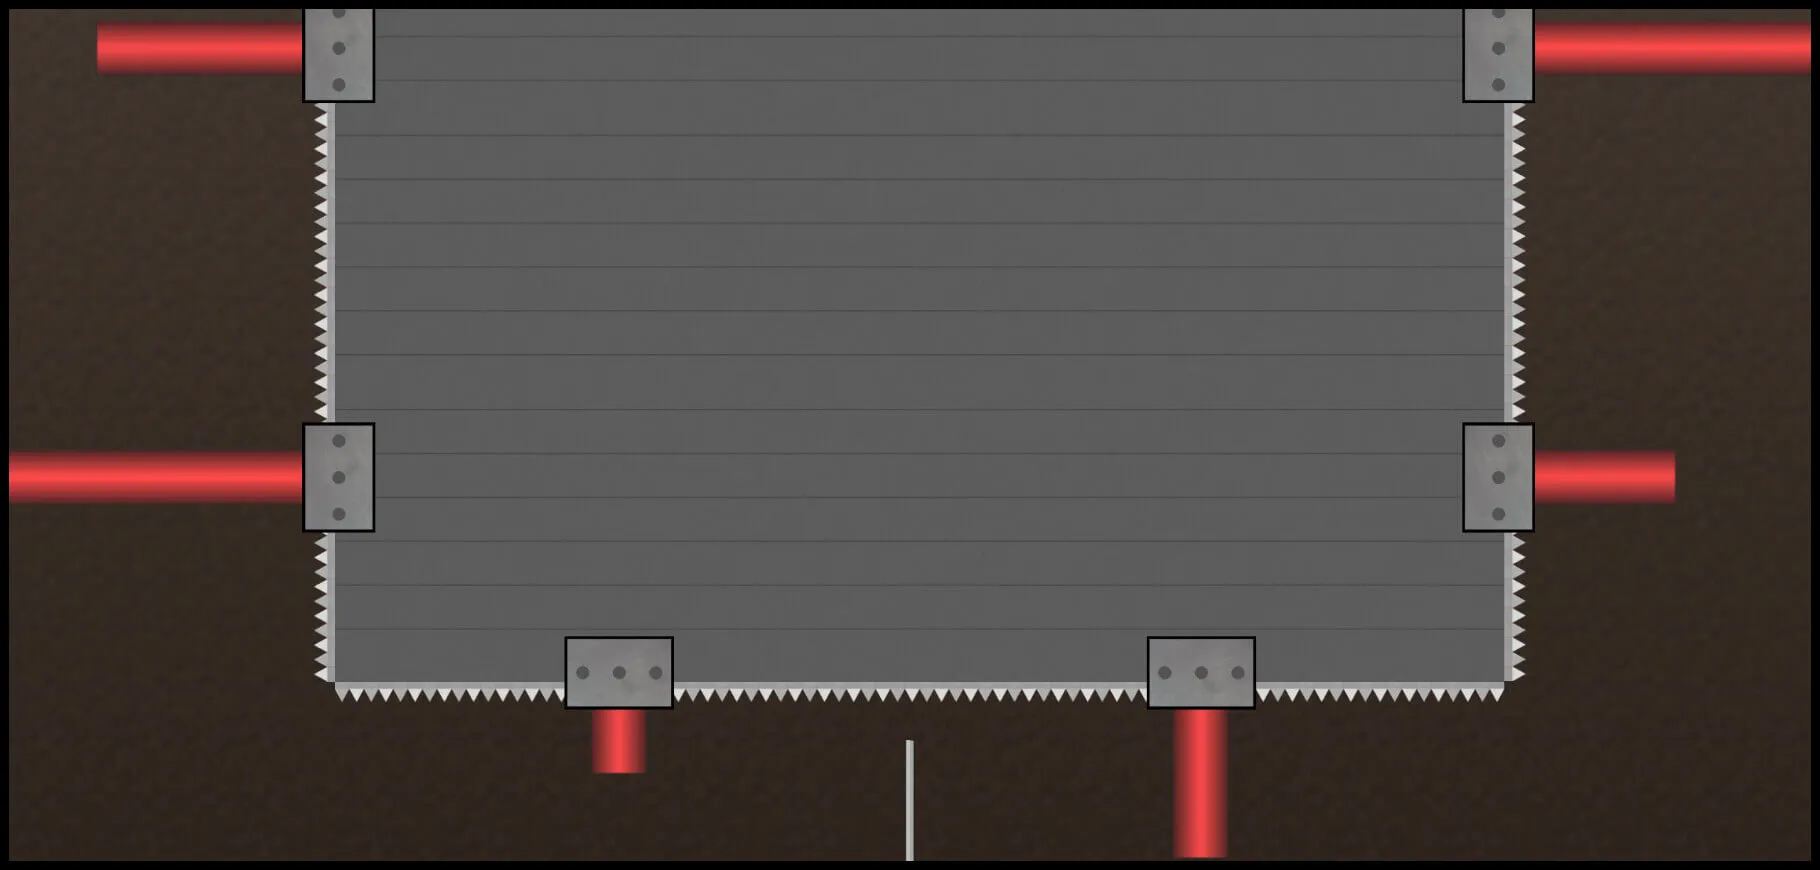 horseshoe level screenshot from the game reflex runner.